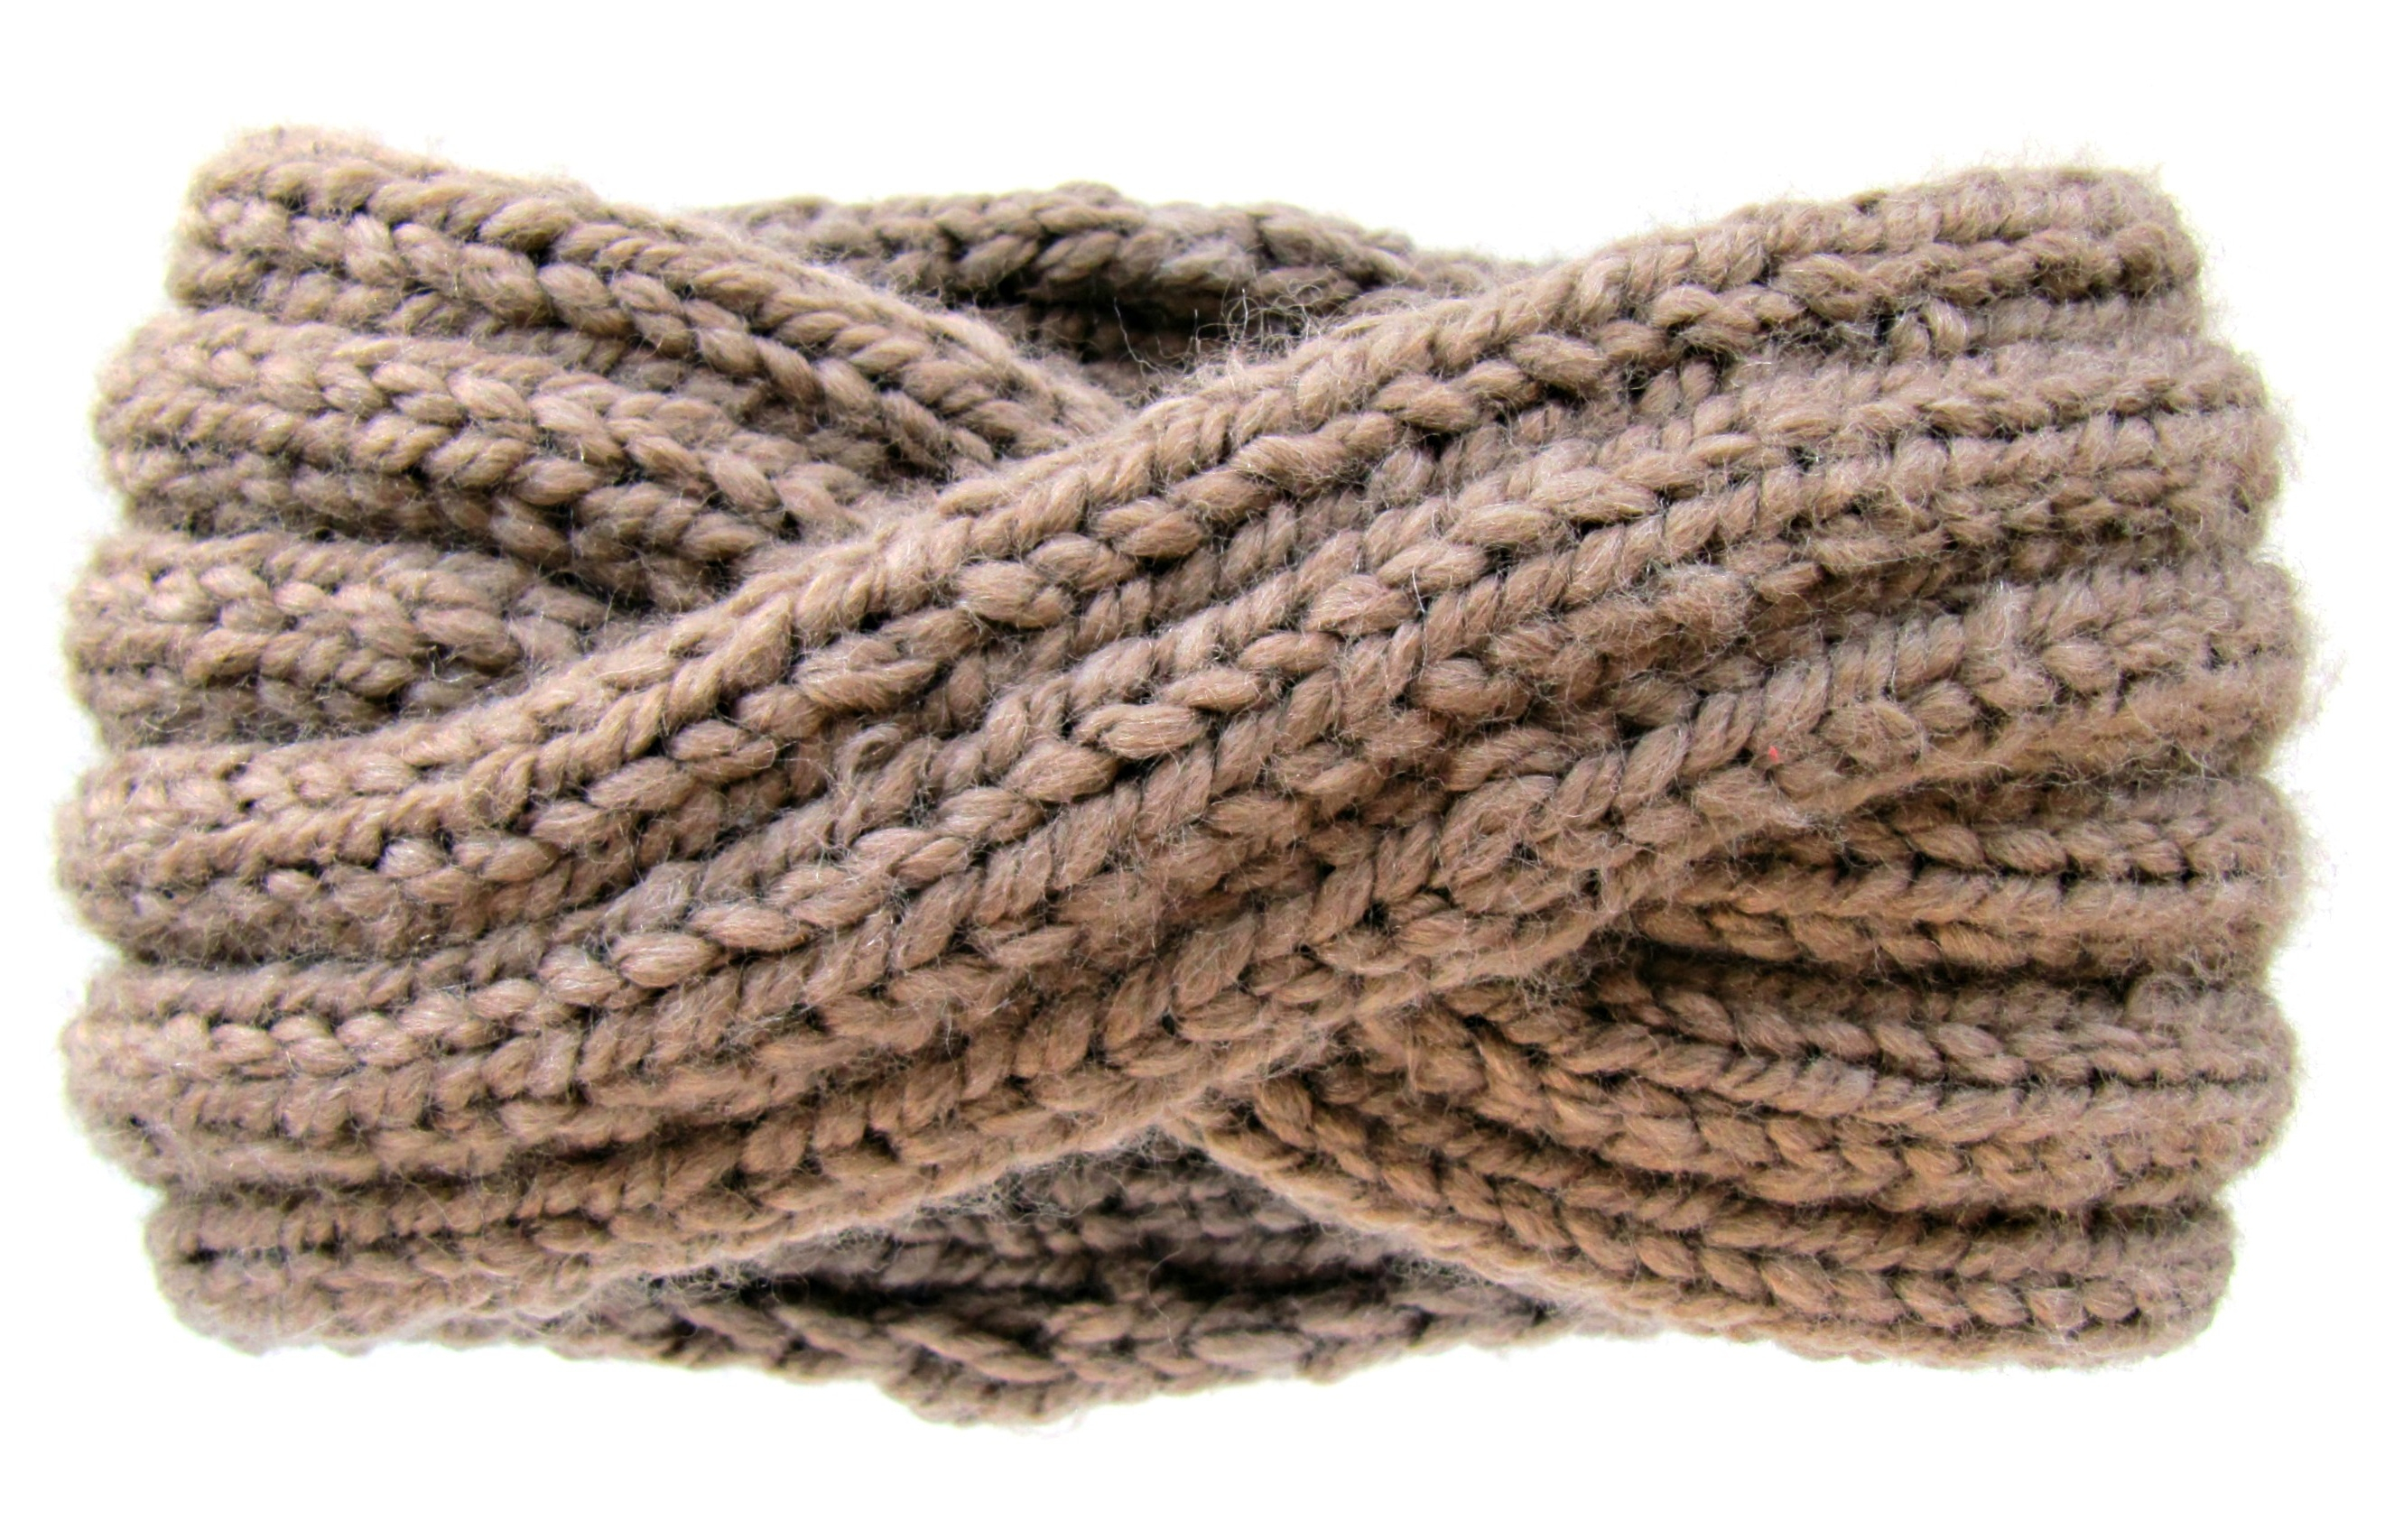 Knitting Patterns Headbands New Ear Warmers Knitting Patterns A Sale And A Giveway Knits